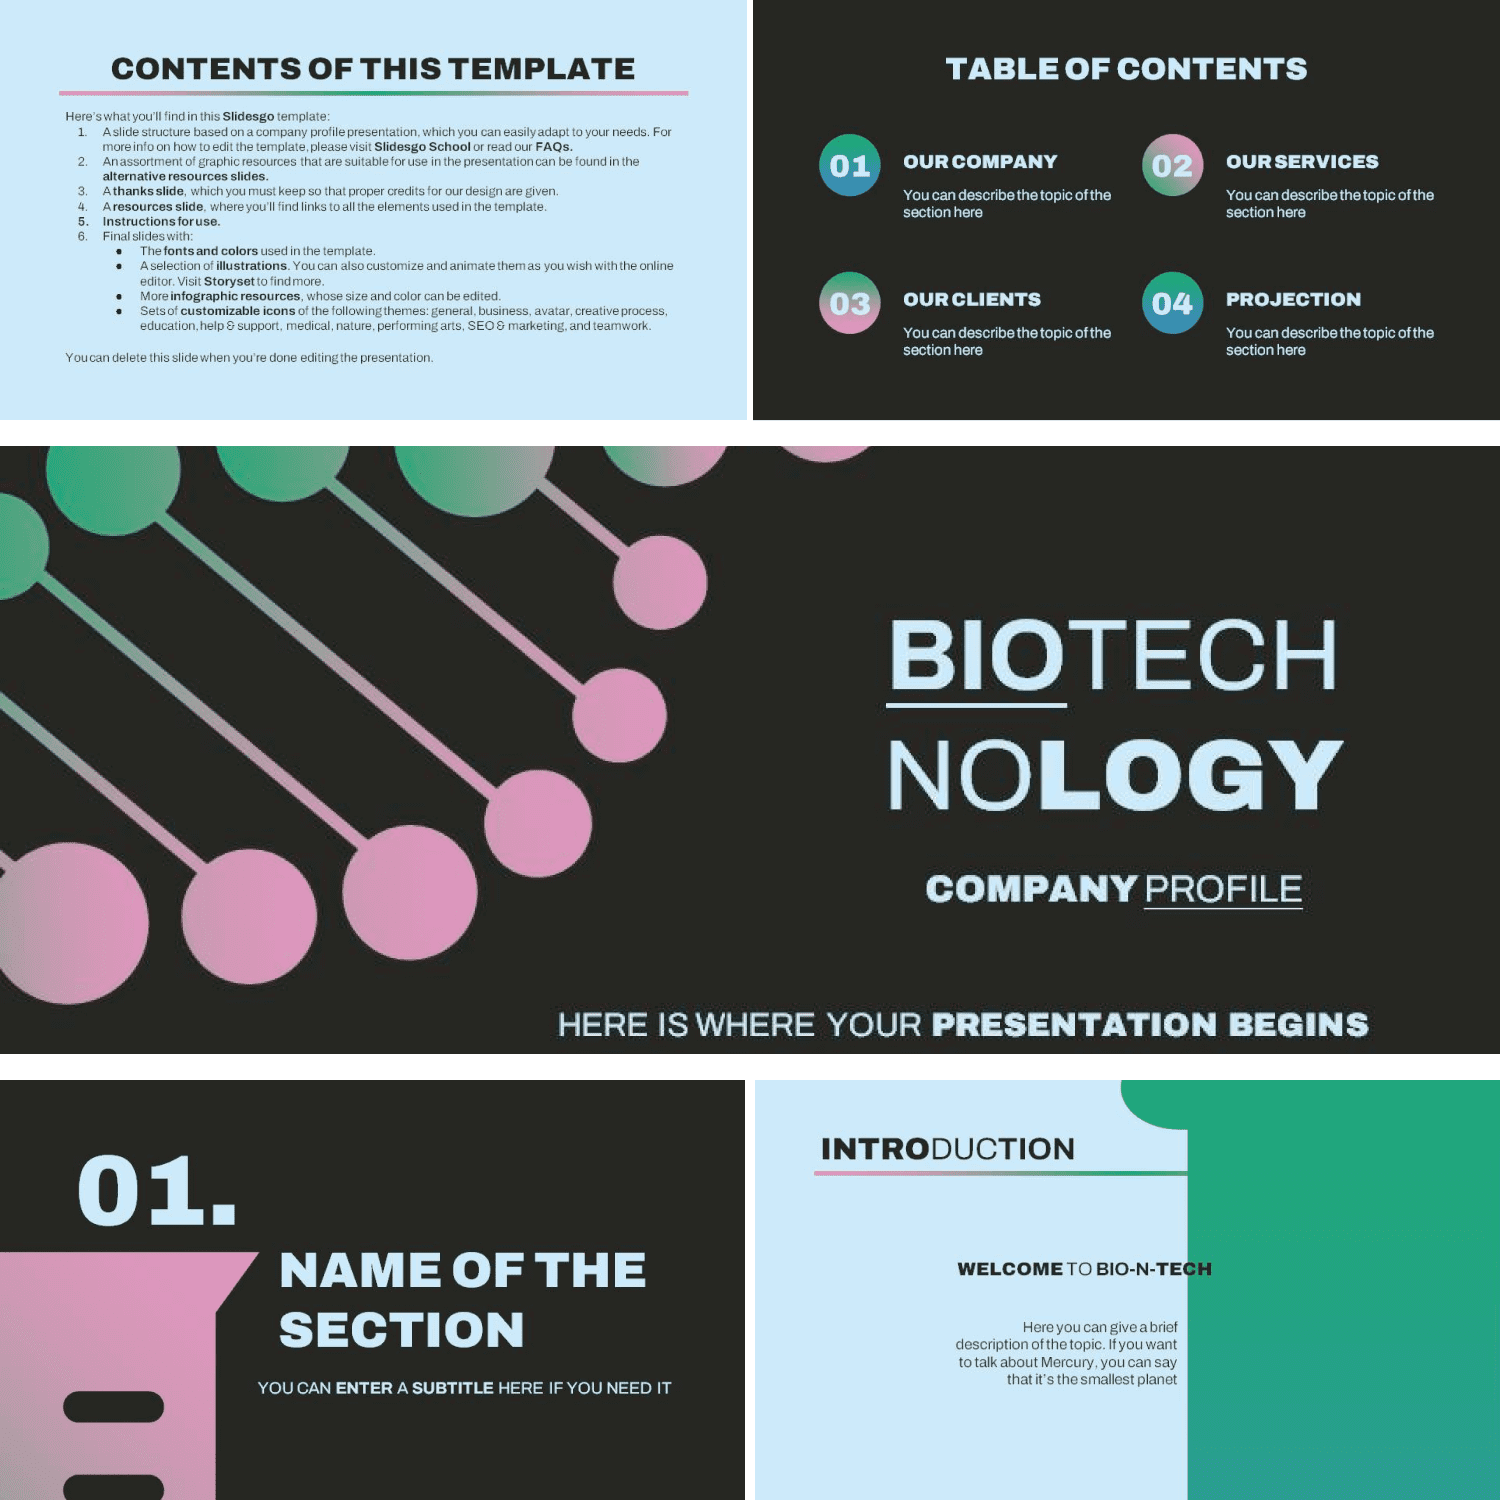 MasterBundles preview for Biotechnology Company Profile Presentation template.